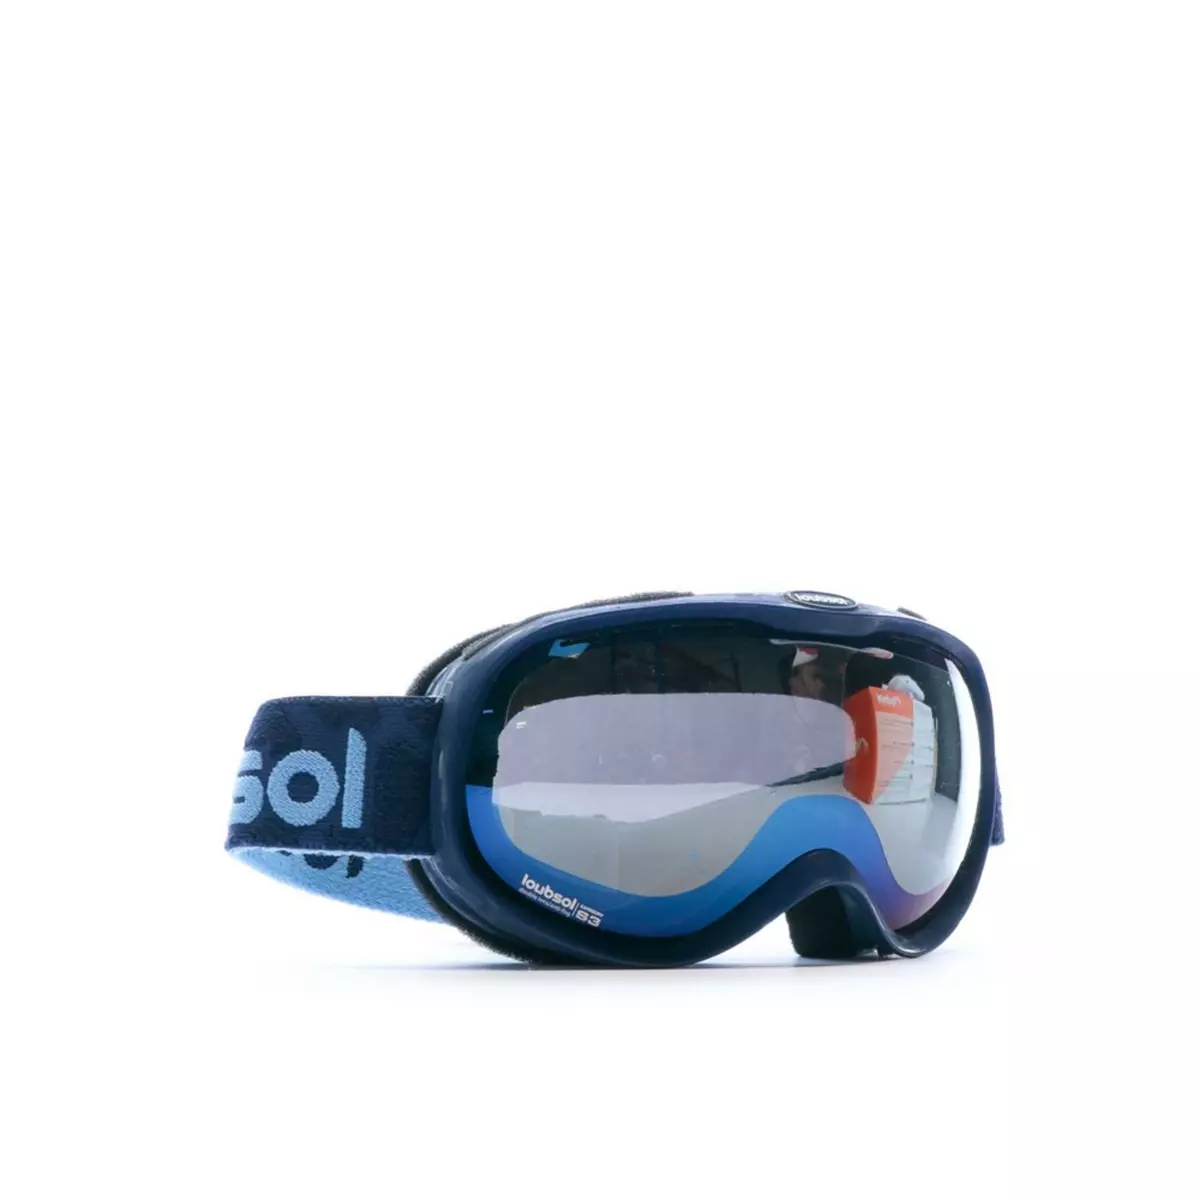  Masque de ski marine homme Loubsol Gliss